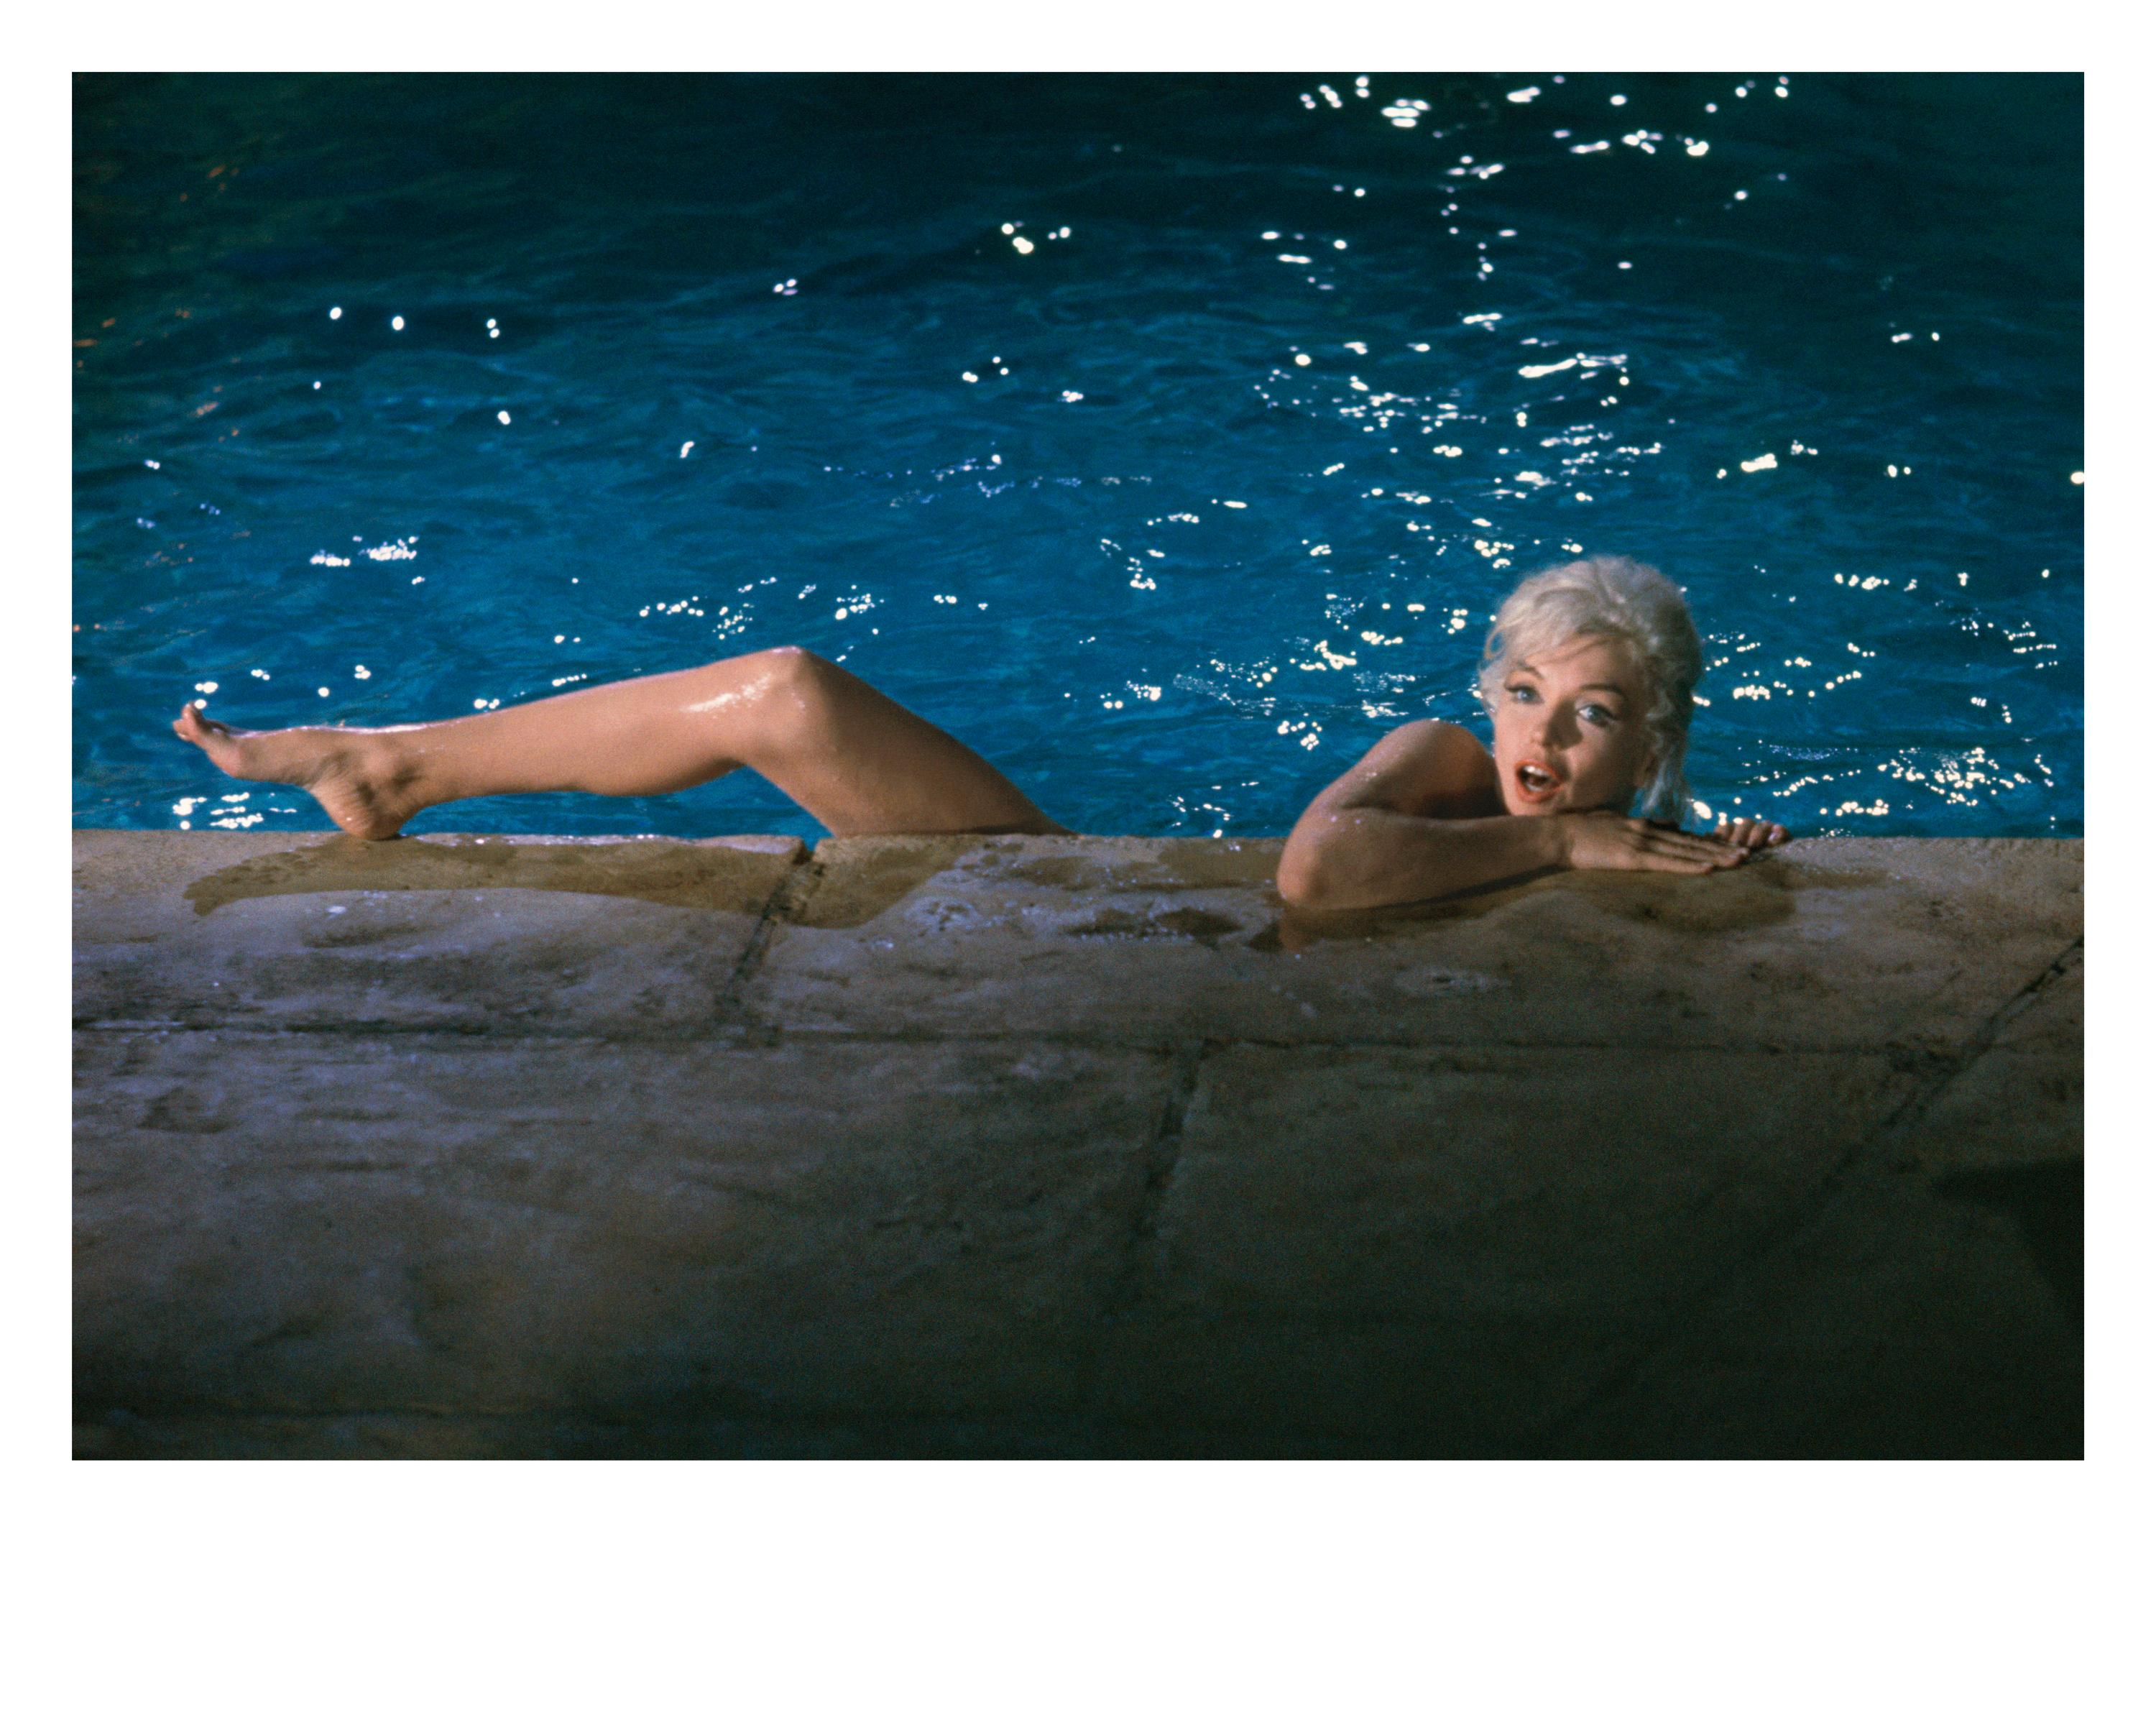 Photographie d'Hollywood des annes 1960 par Lawrence Schiller  Marilyn Monroe 